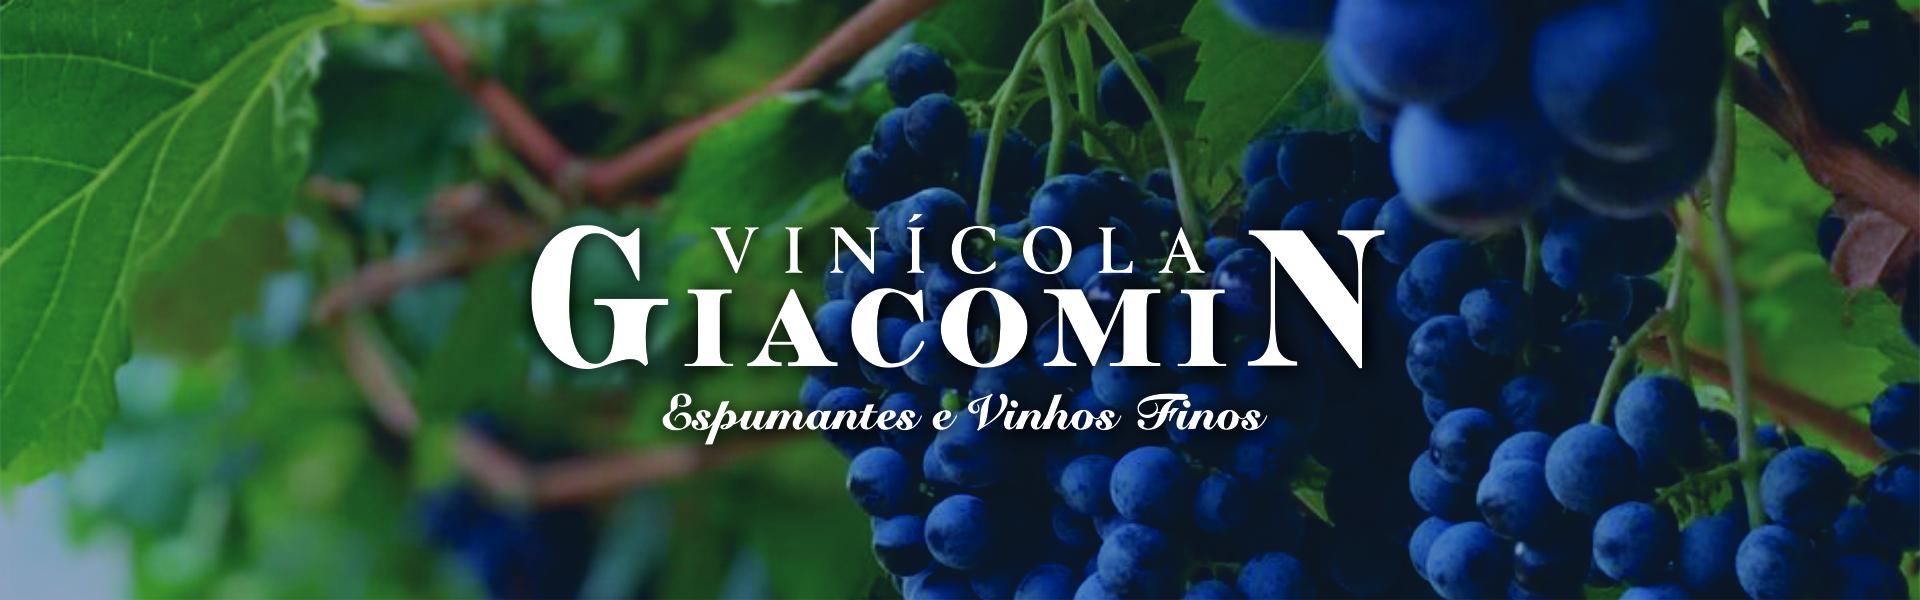 Vinícola Giacomin